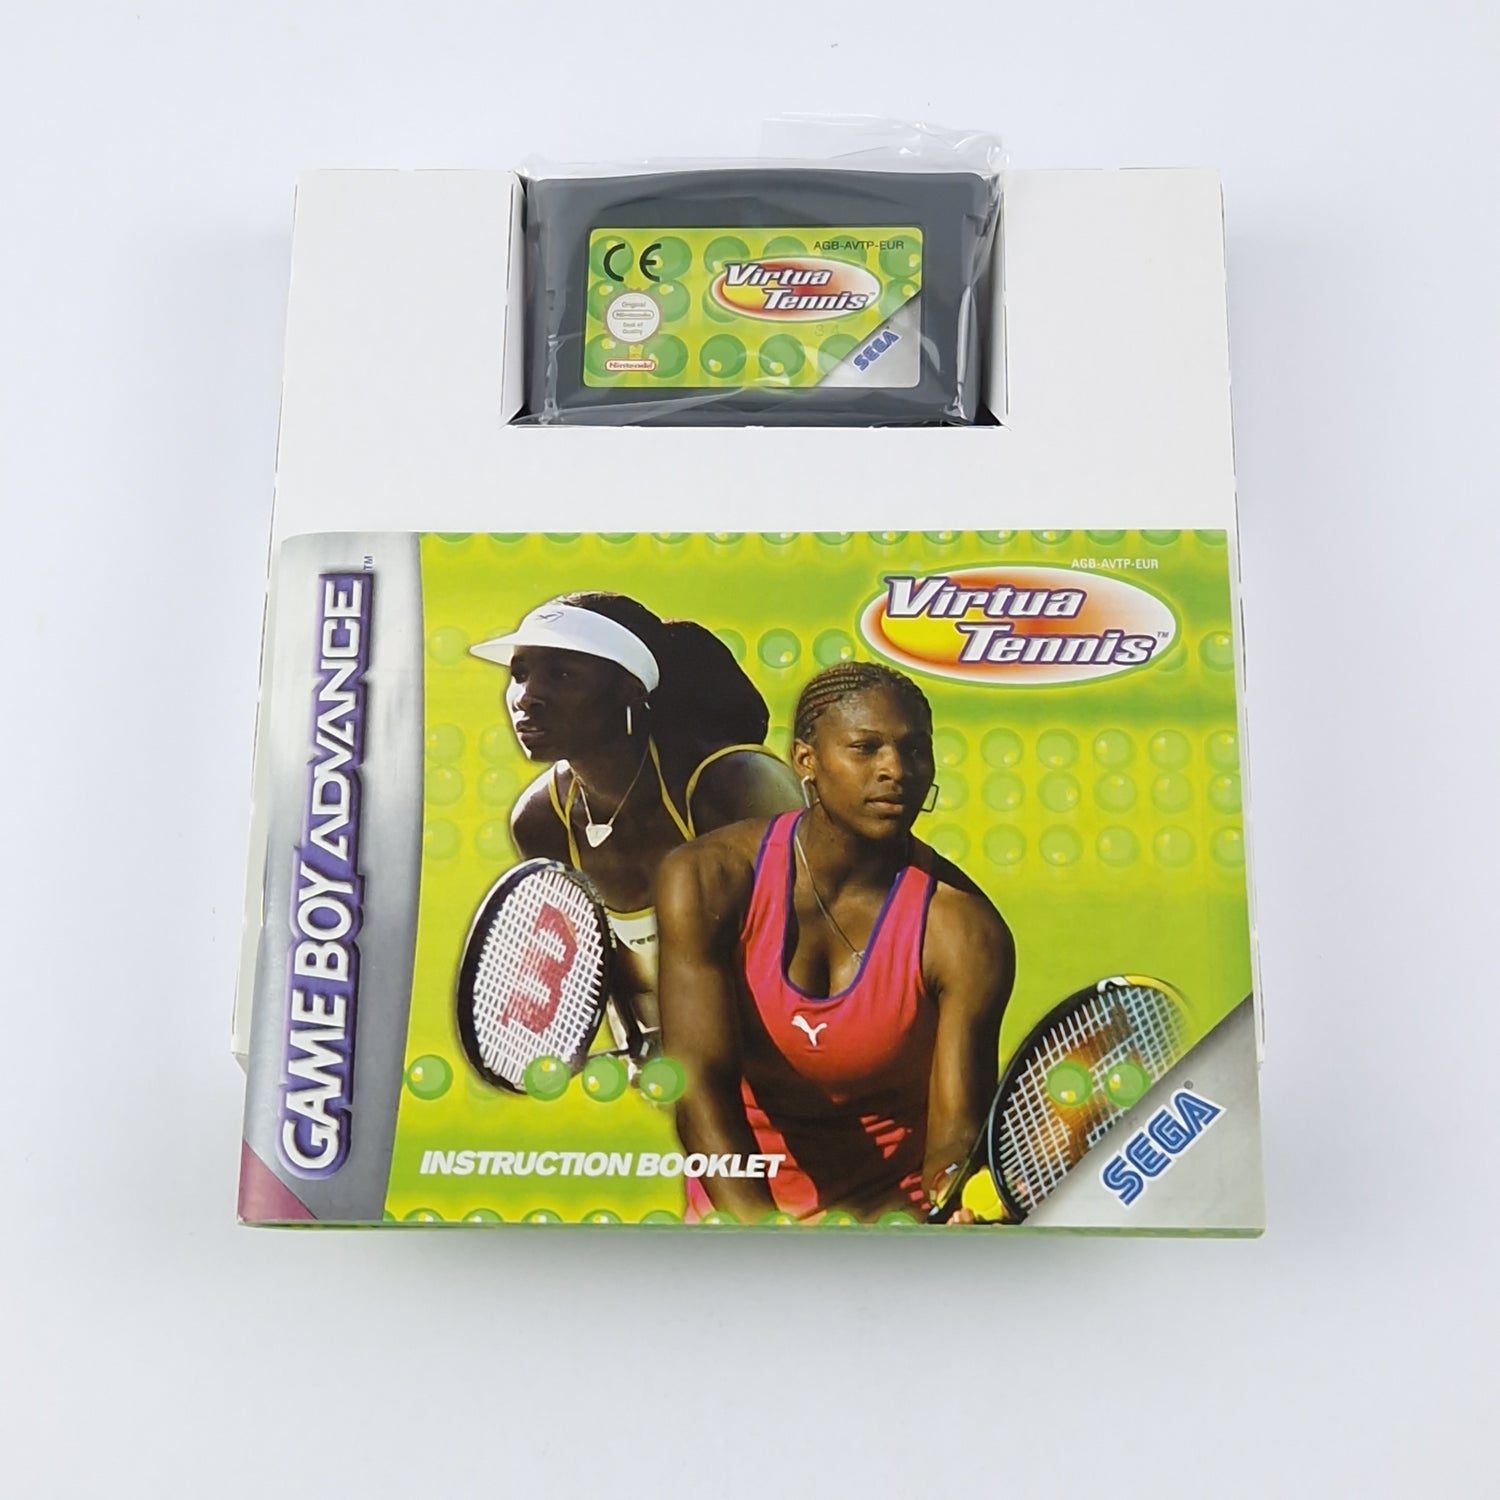 Nintendo Game Boy Advance Game: Virtua Tennis - OVP Instructions Module | GBA PAL